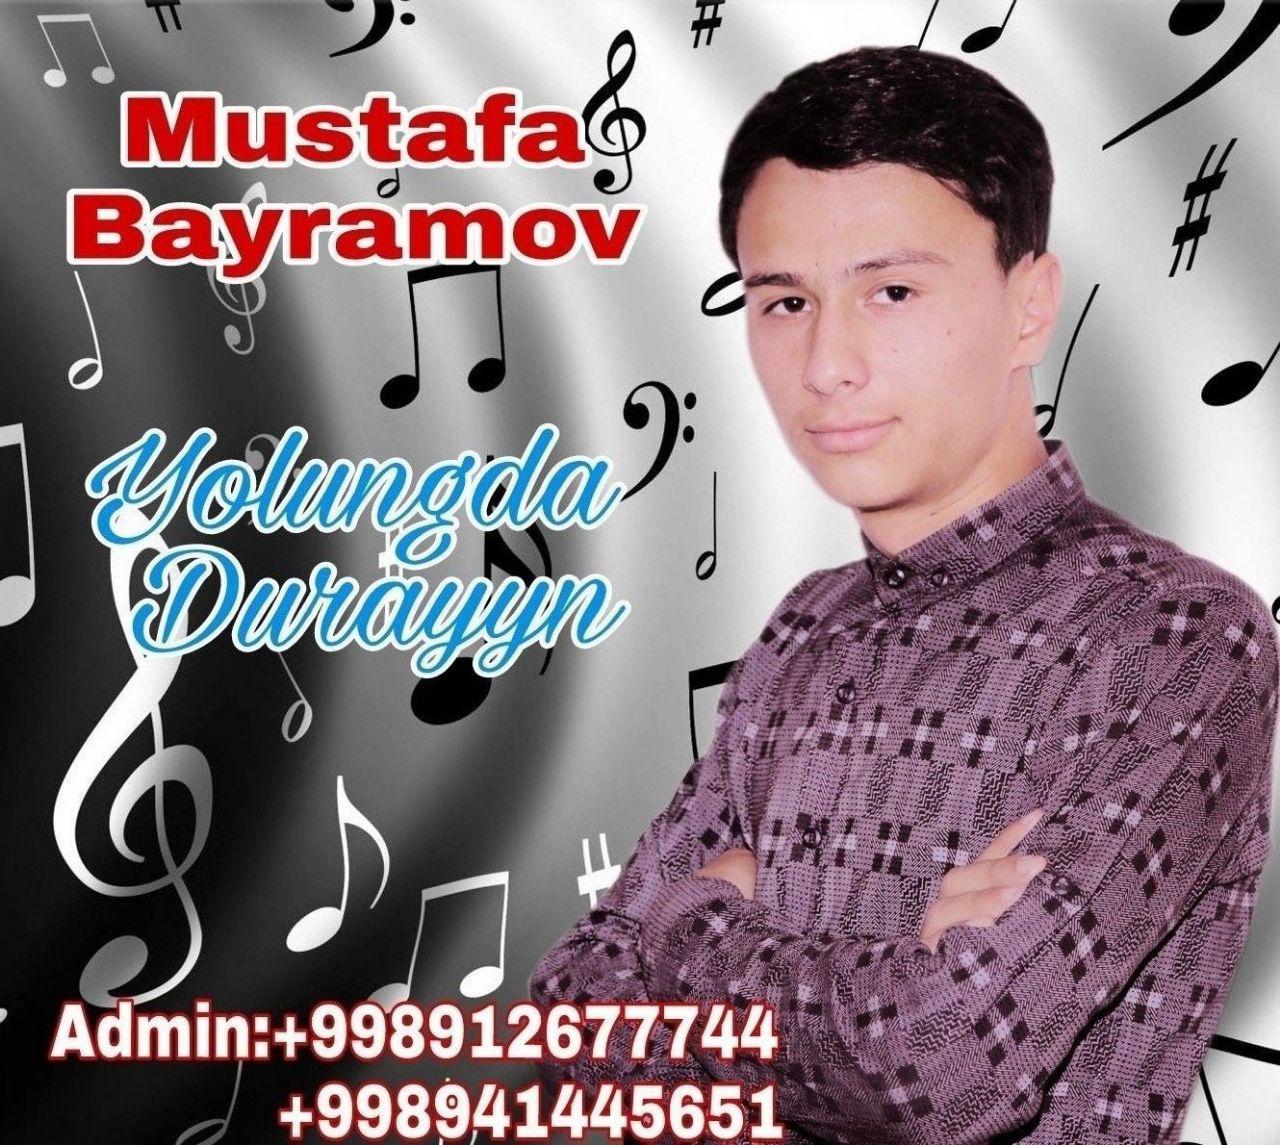 دانلود آهنگ جدید Mustafa Bayramov به نام Yolungda Durayyn